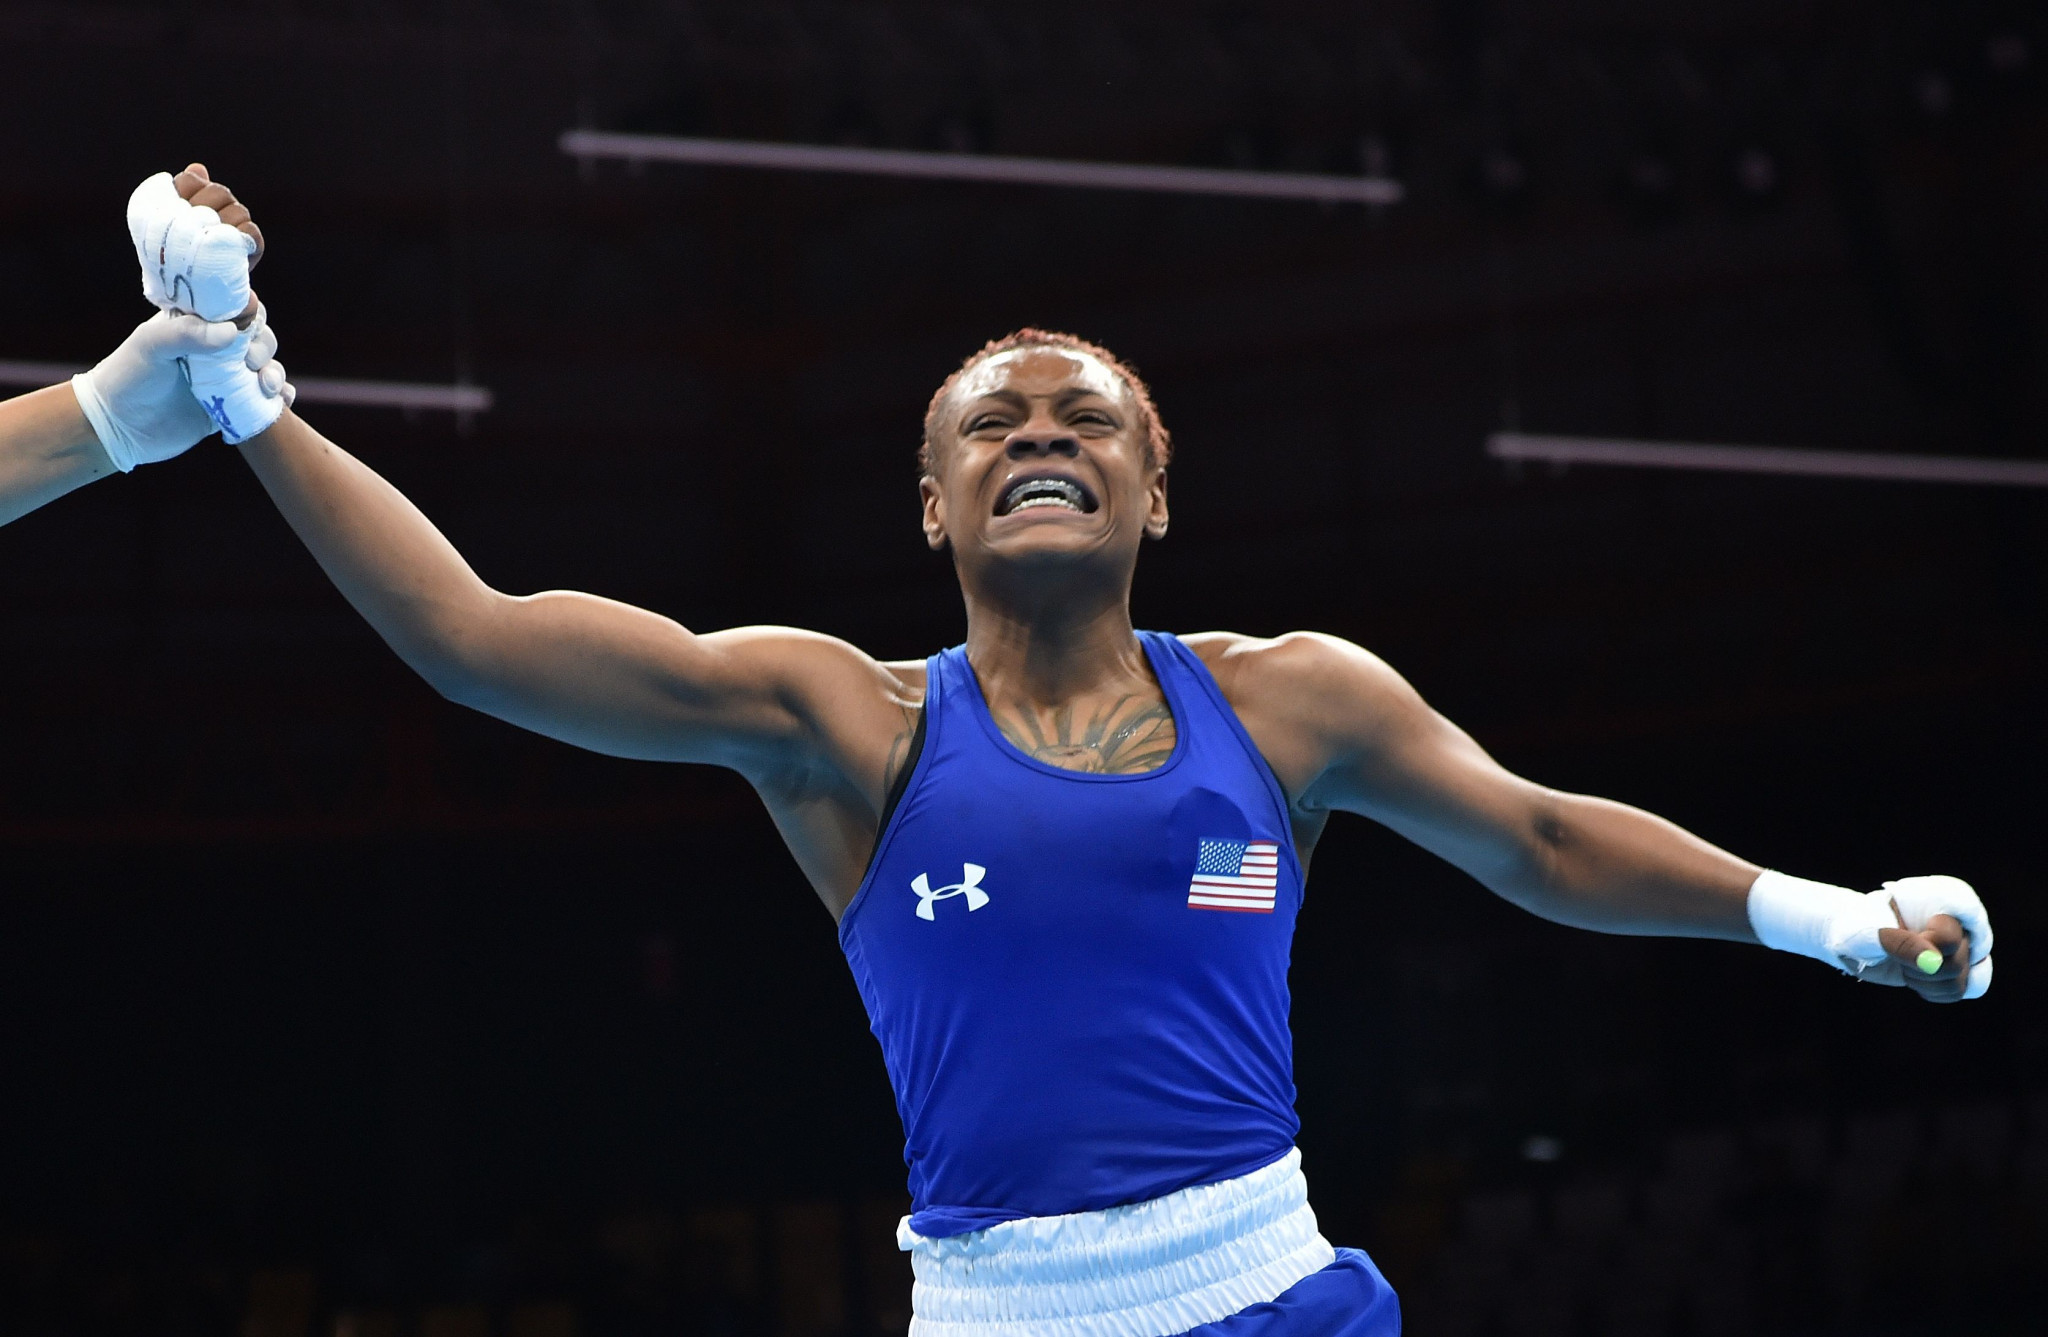 Victory for Pan American Games champion Jones at AIBA Women's World Championships